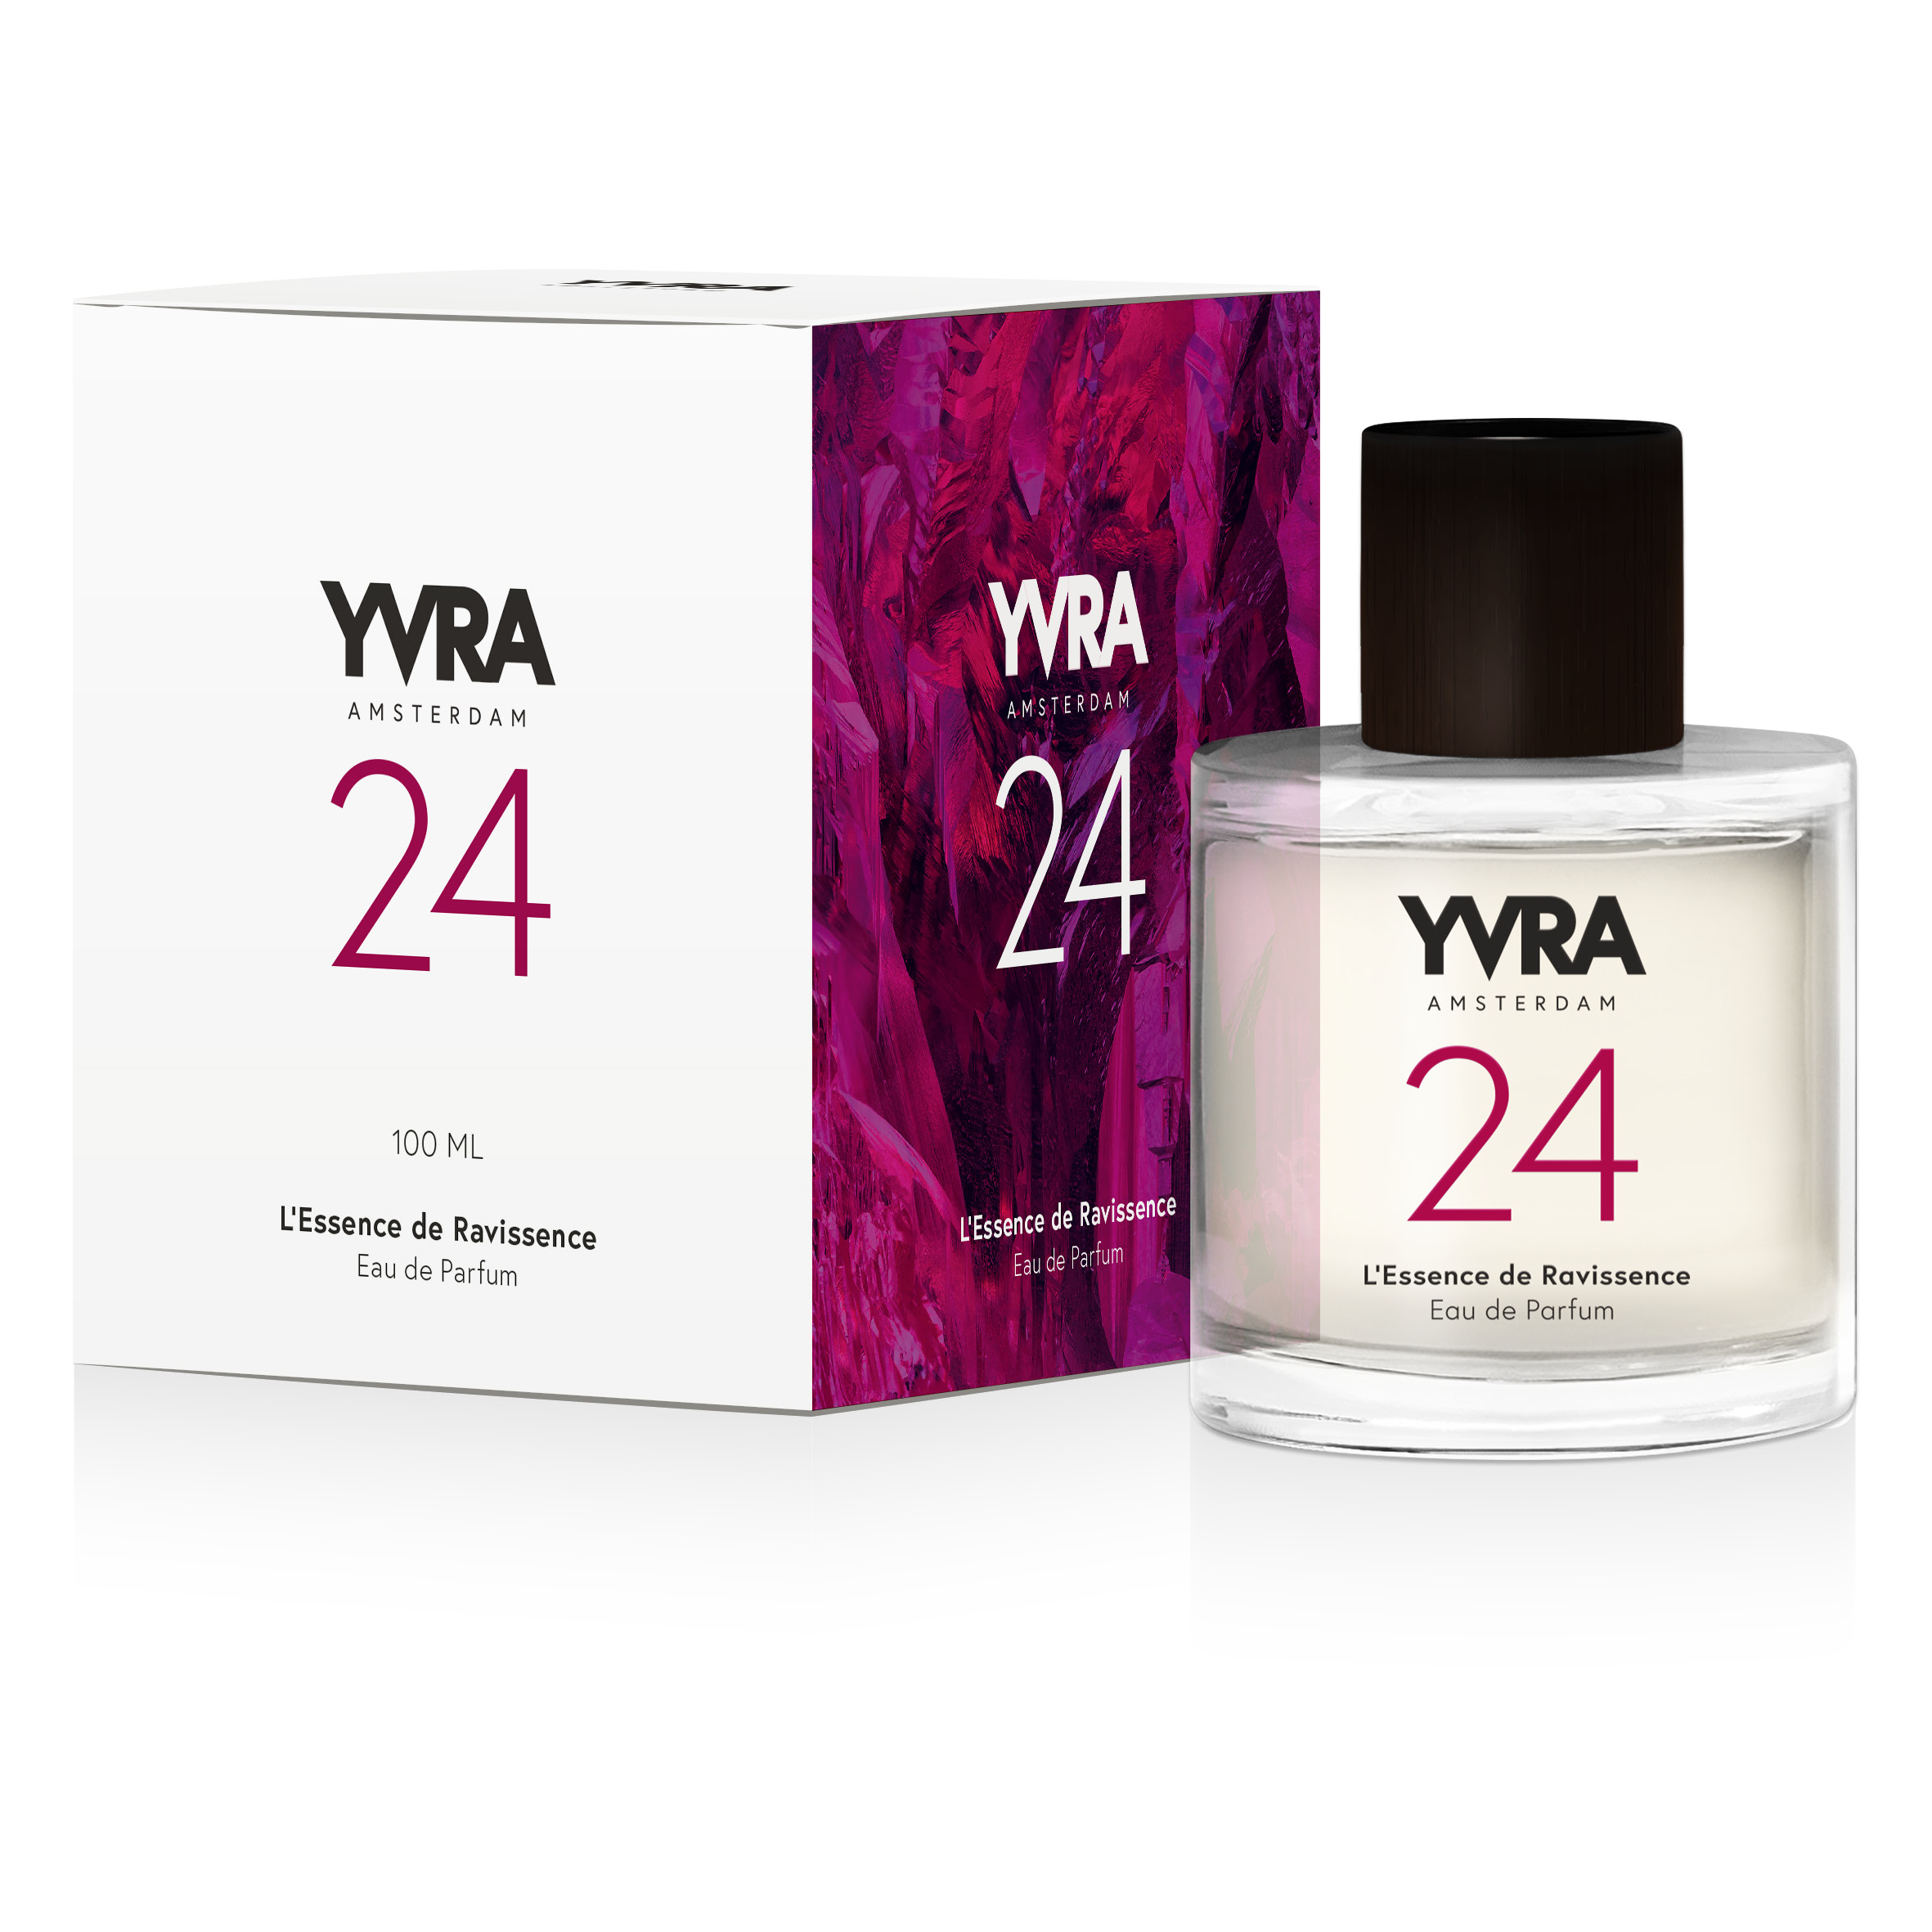 Yvra 24 | eau de parfum